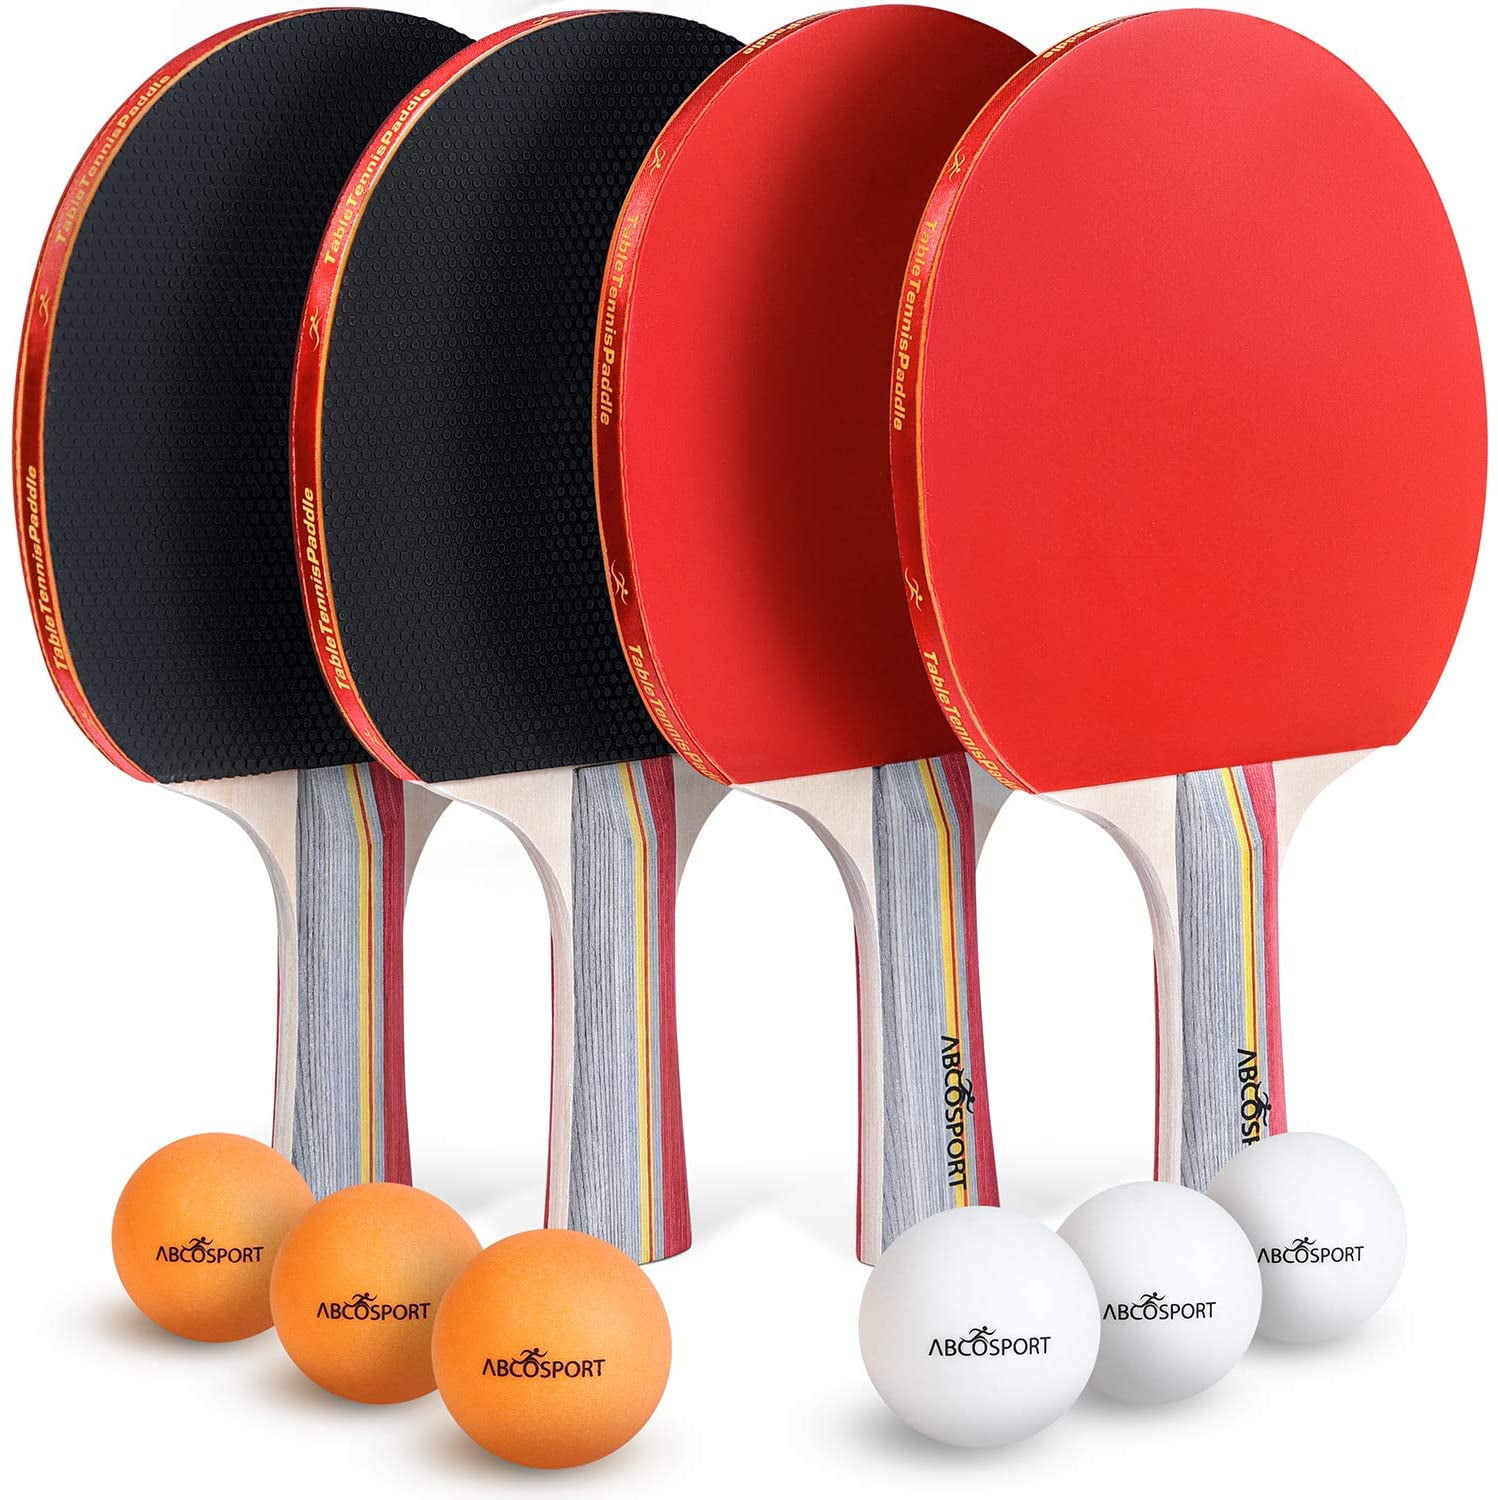 Ping Pong Paddles Table Tennis Set 4 Player Professional Racket Paddle 8 Balls 